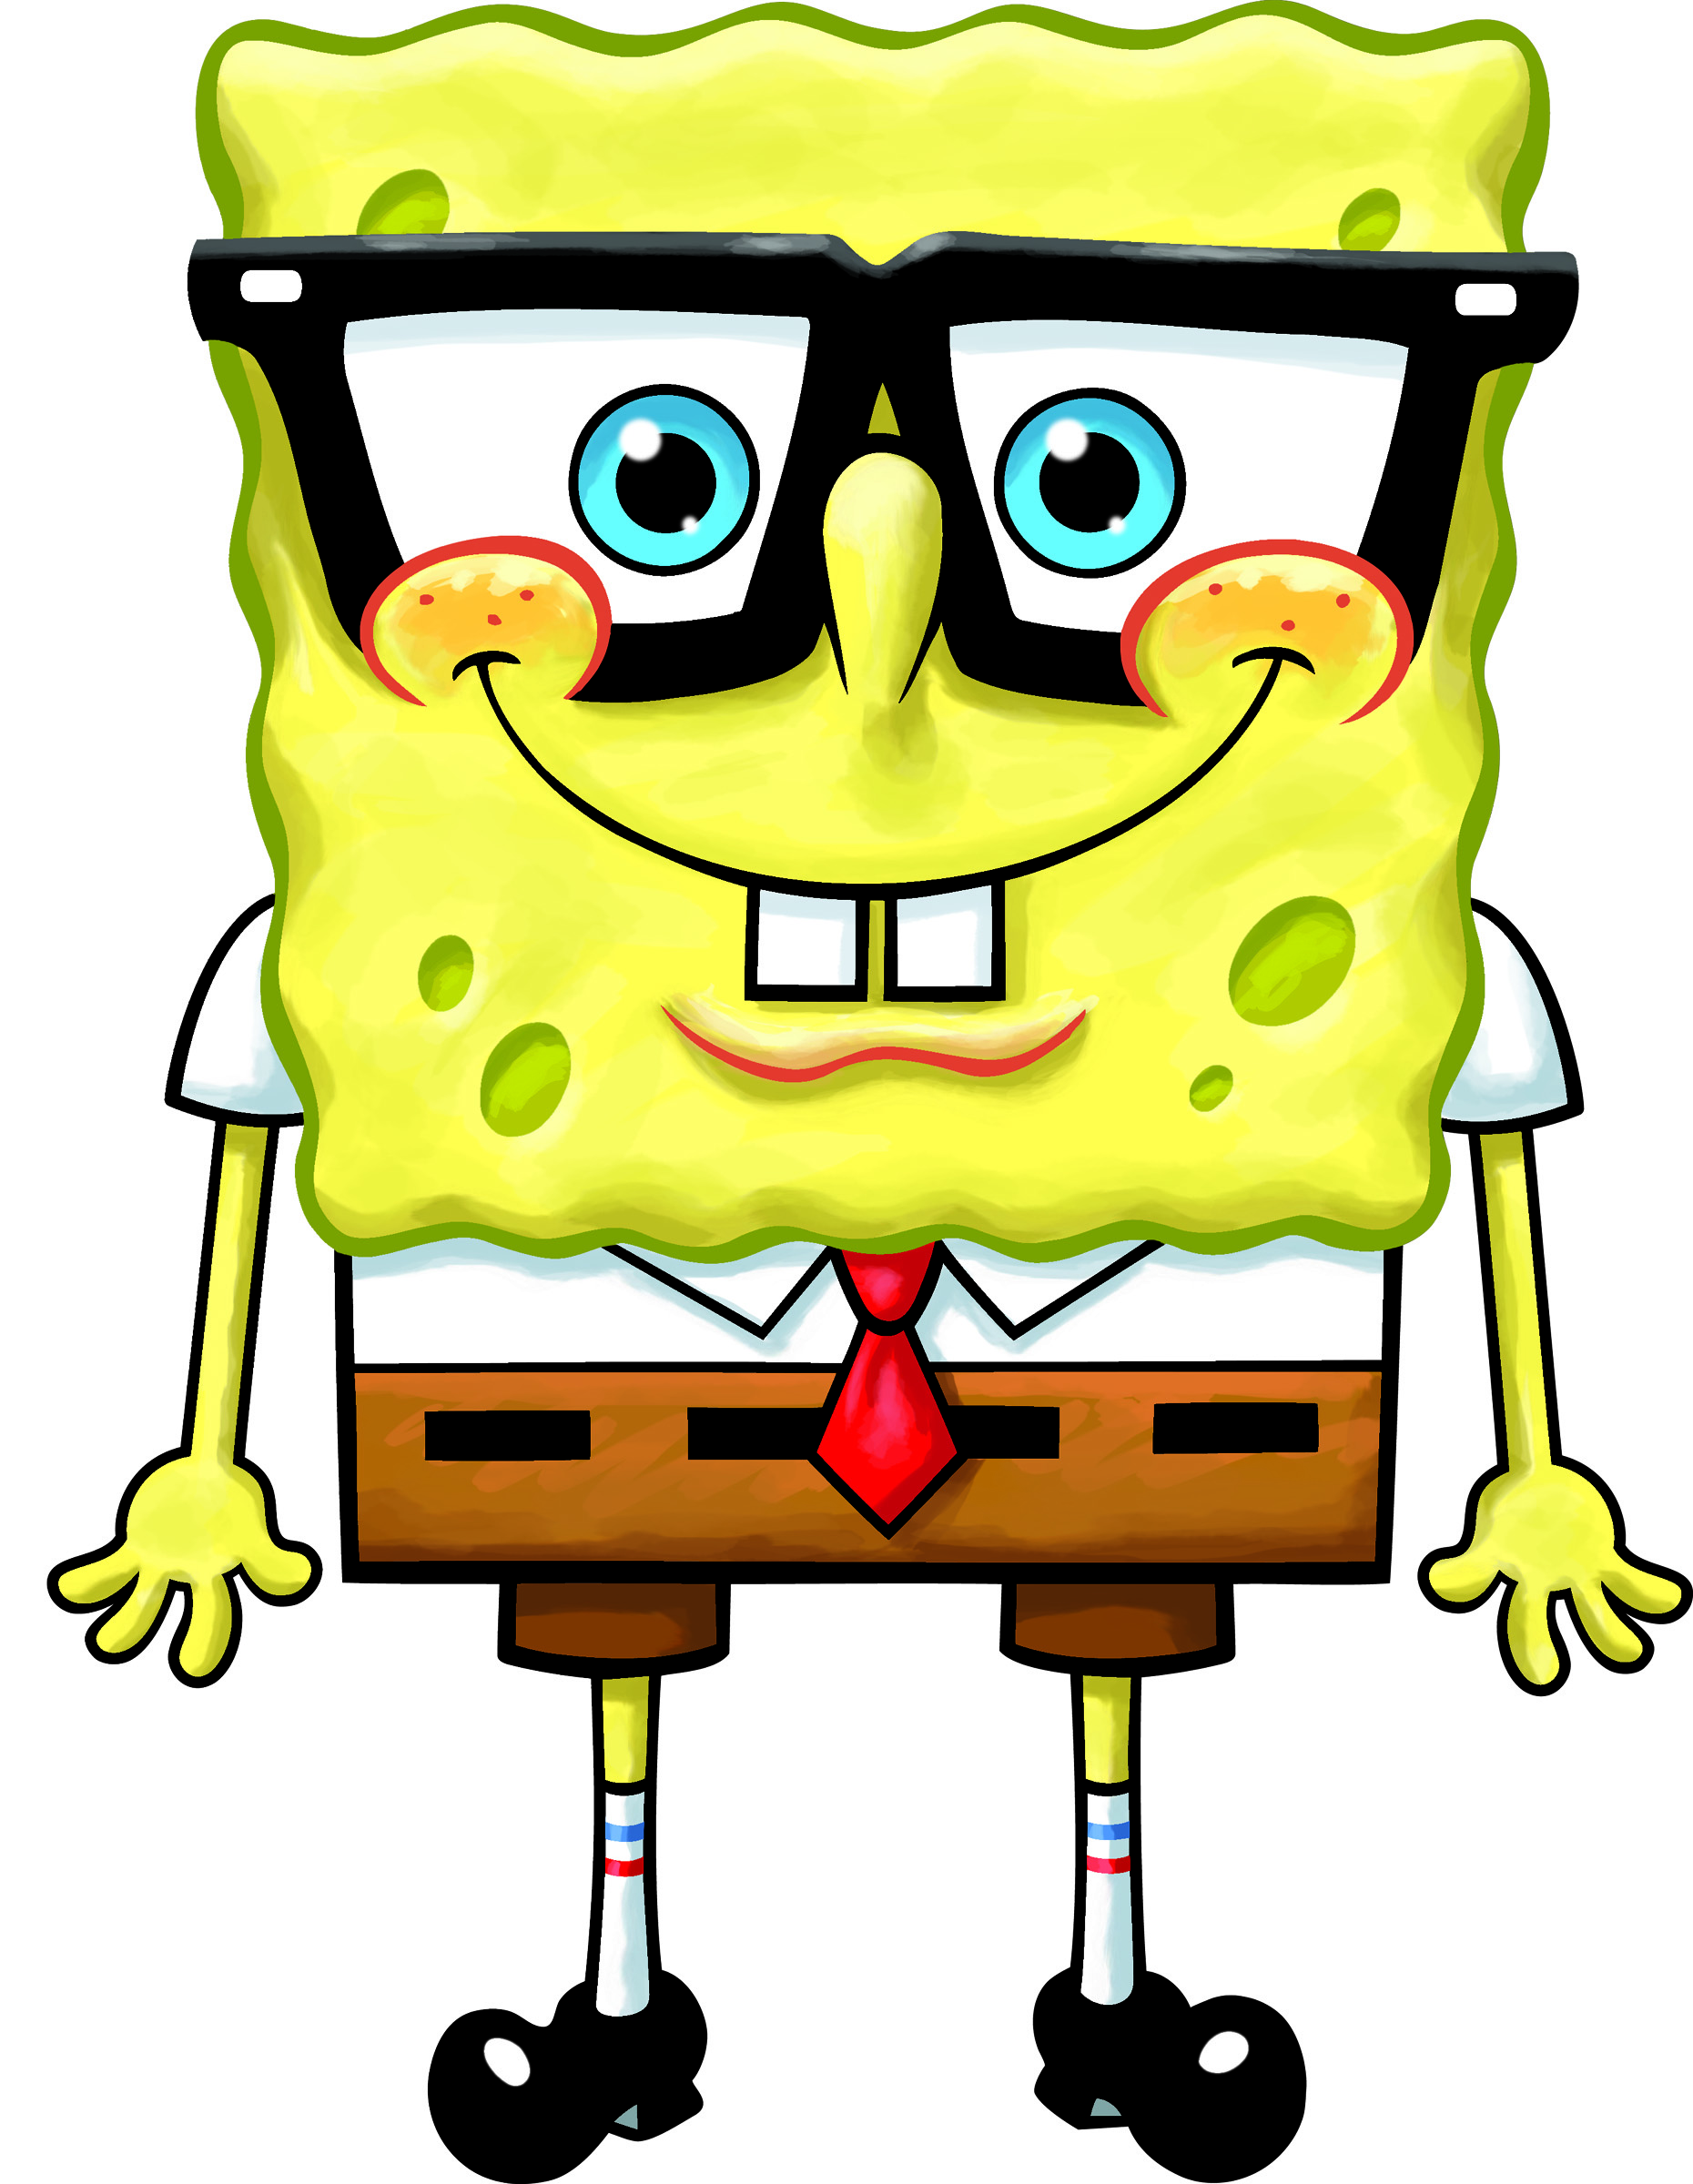 SpongeBob SquarePants (character) - The SpongeBob SquarePants Wiki ...